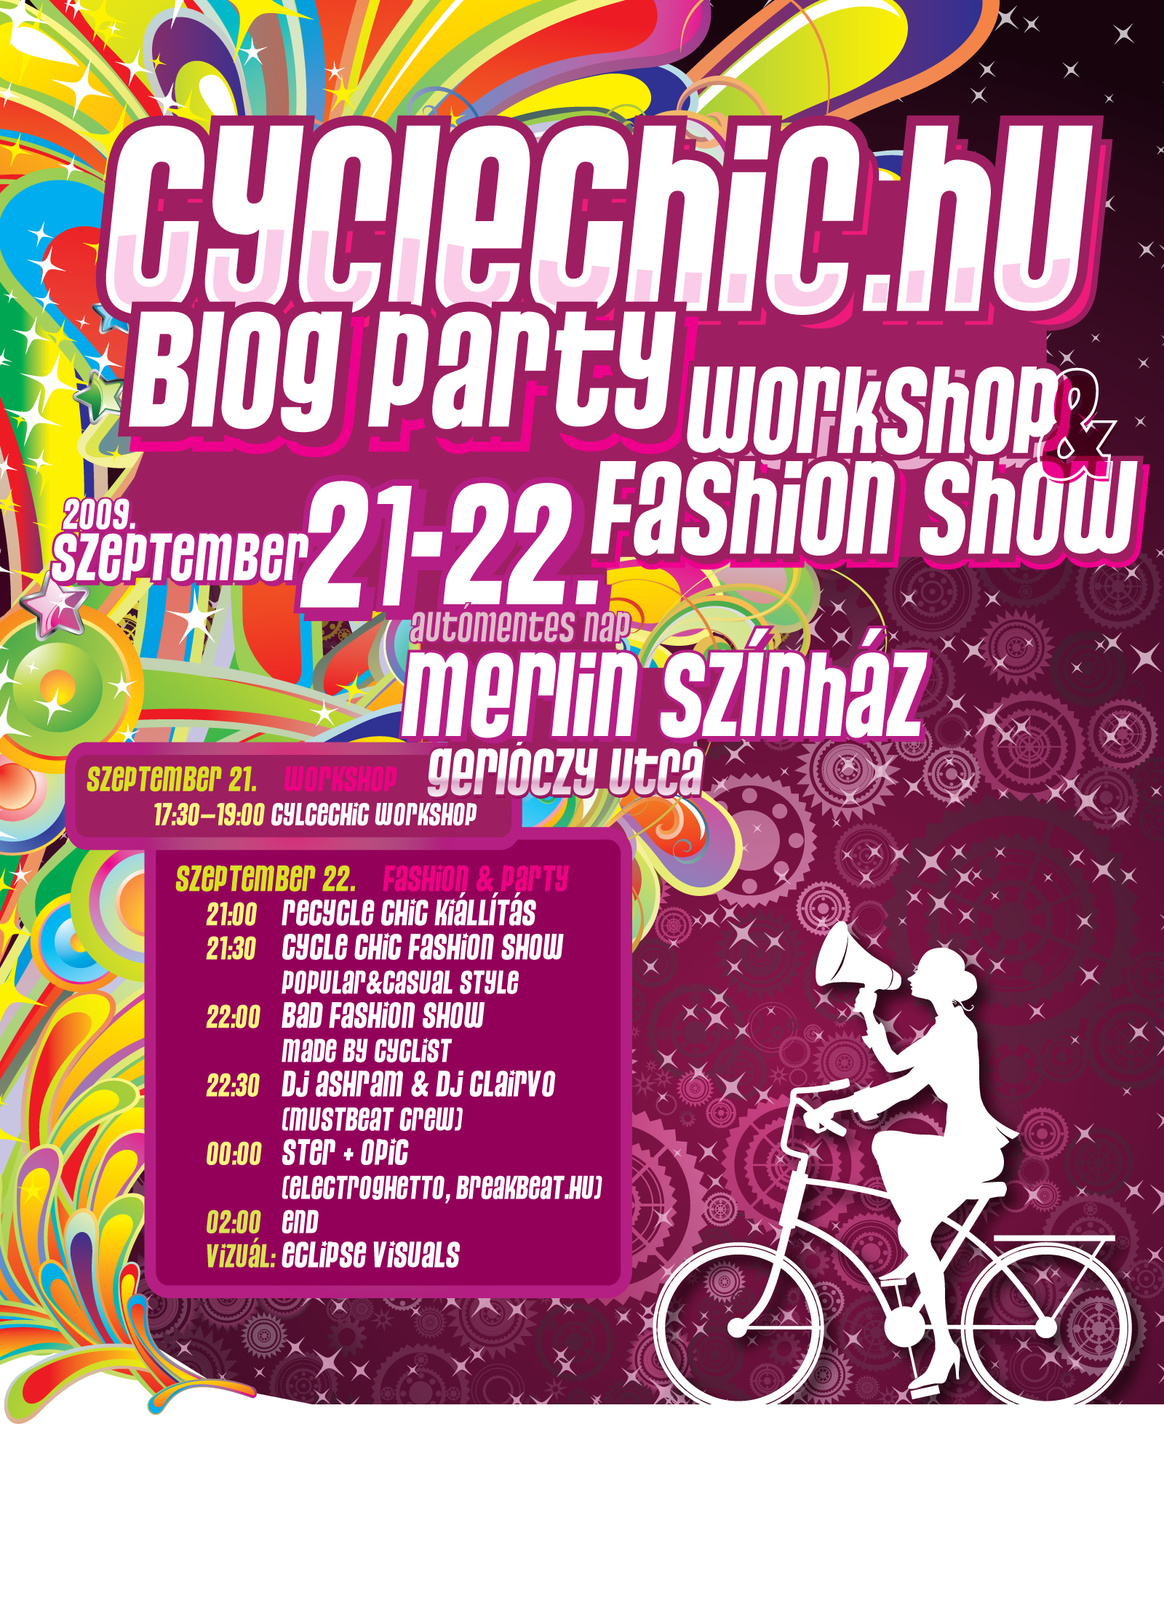 Cyclechic.hu divatbemutató és blog party